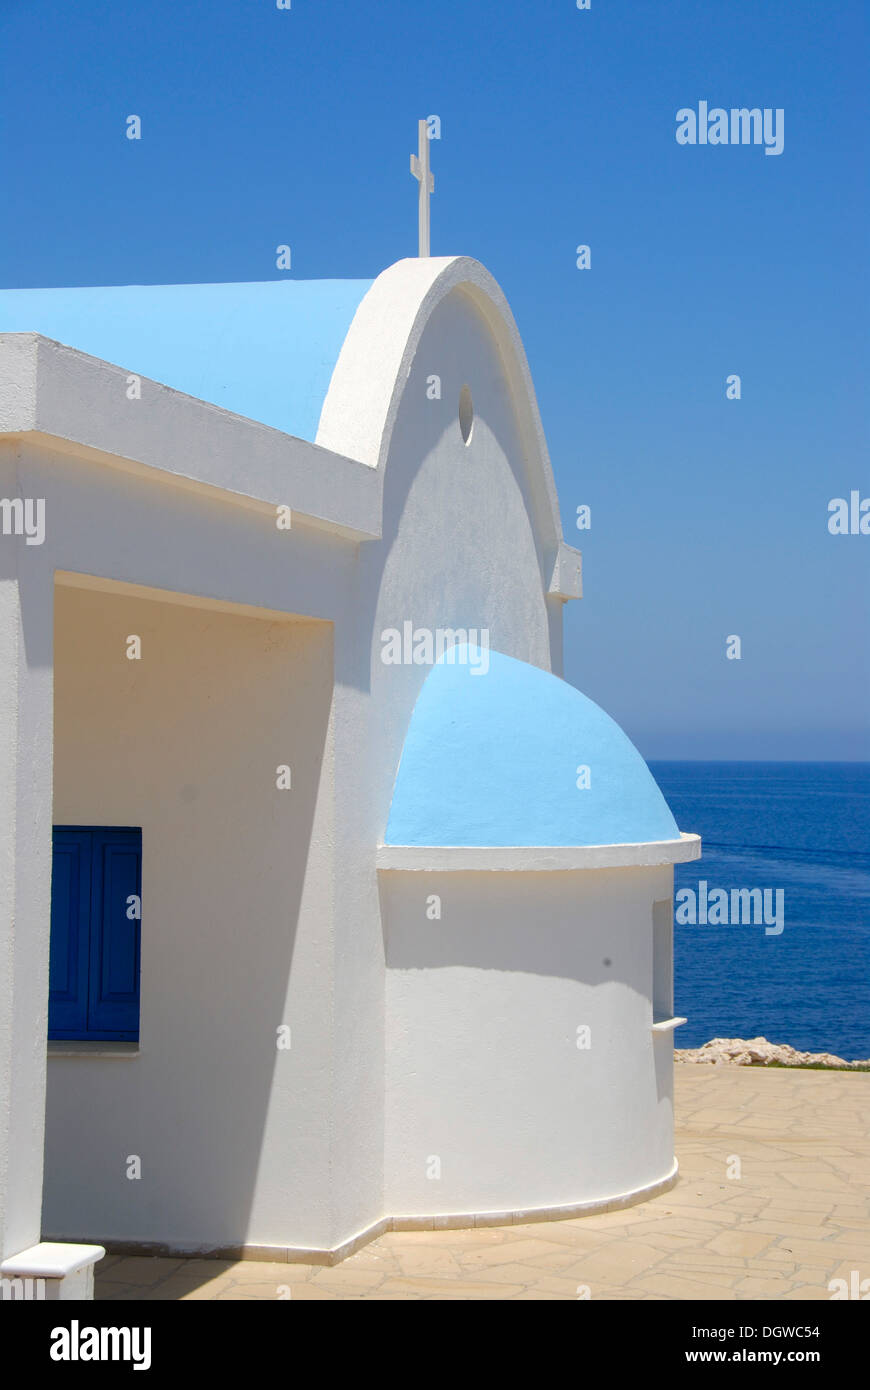 La Cristiandad Ortodoxa griega, la Iglesia de Ayioi Anargyri, Agioi Anargyroi, capilla, mar azul, Cape Greco, cerca de Ayia Napa Foto de stock